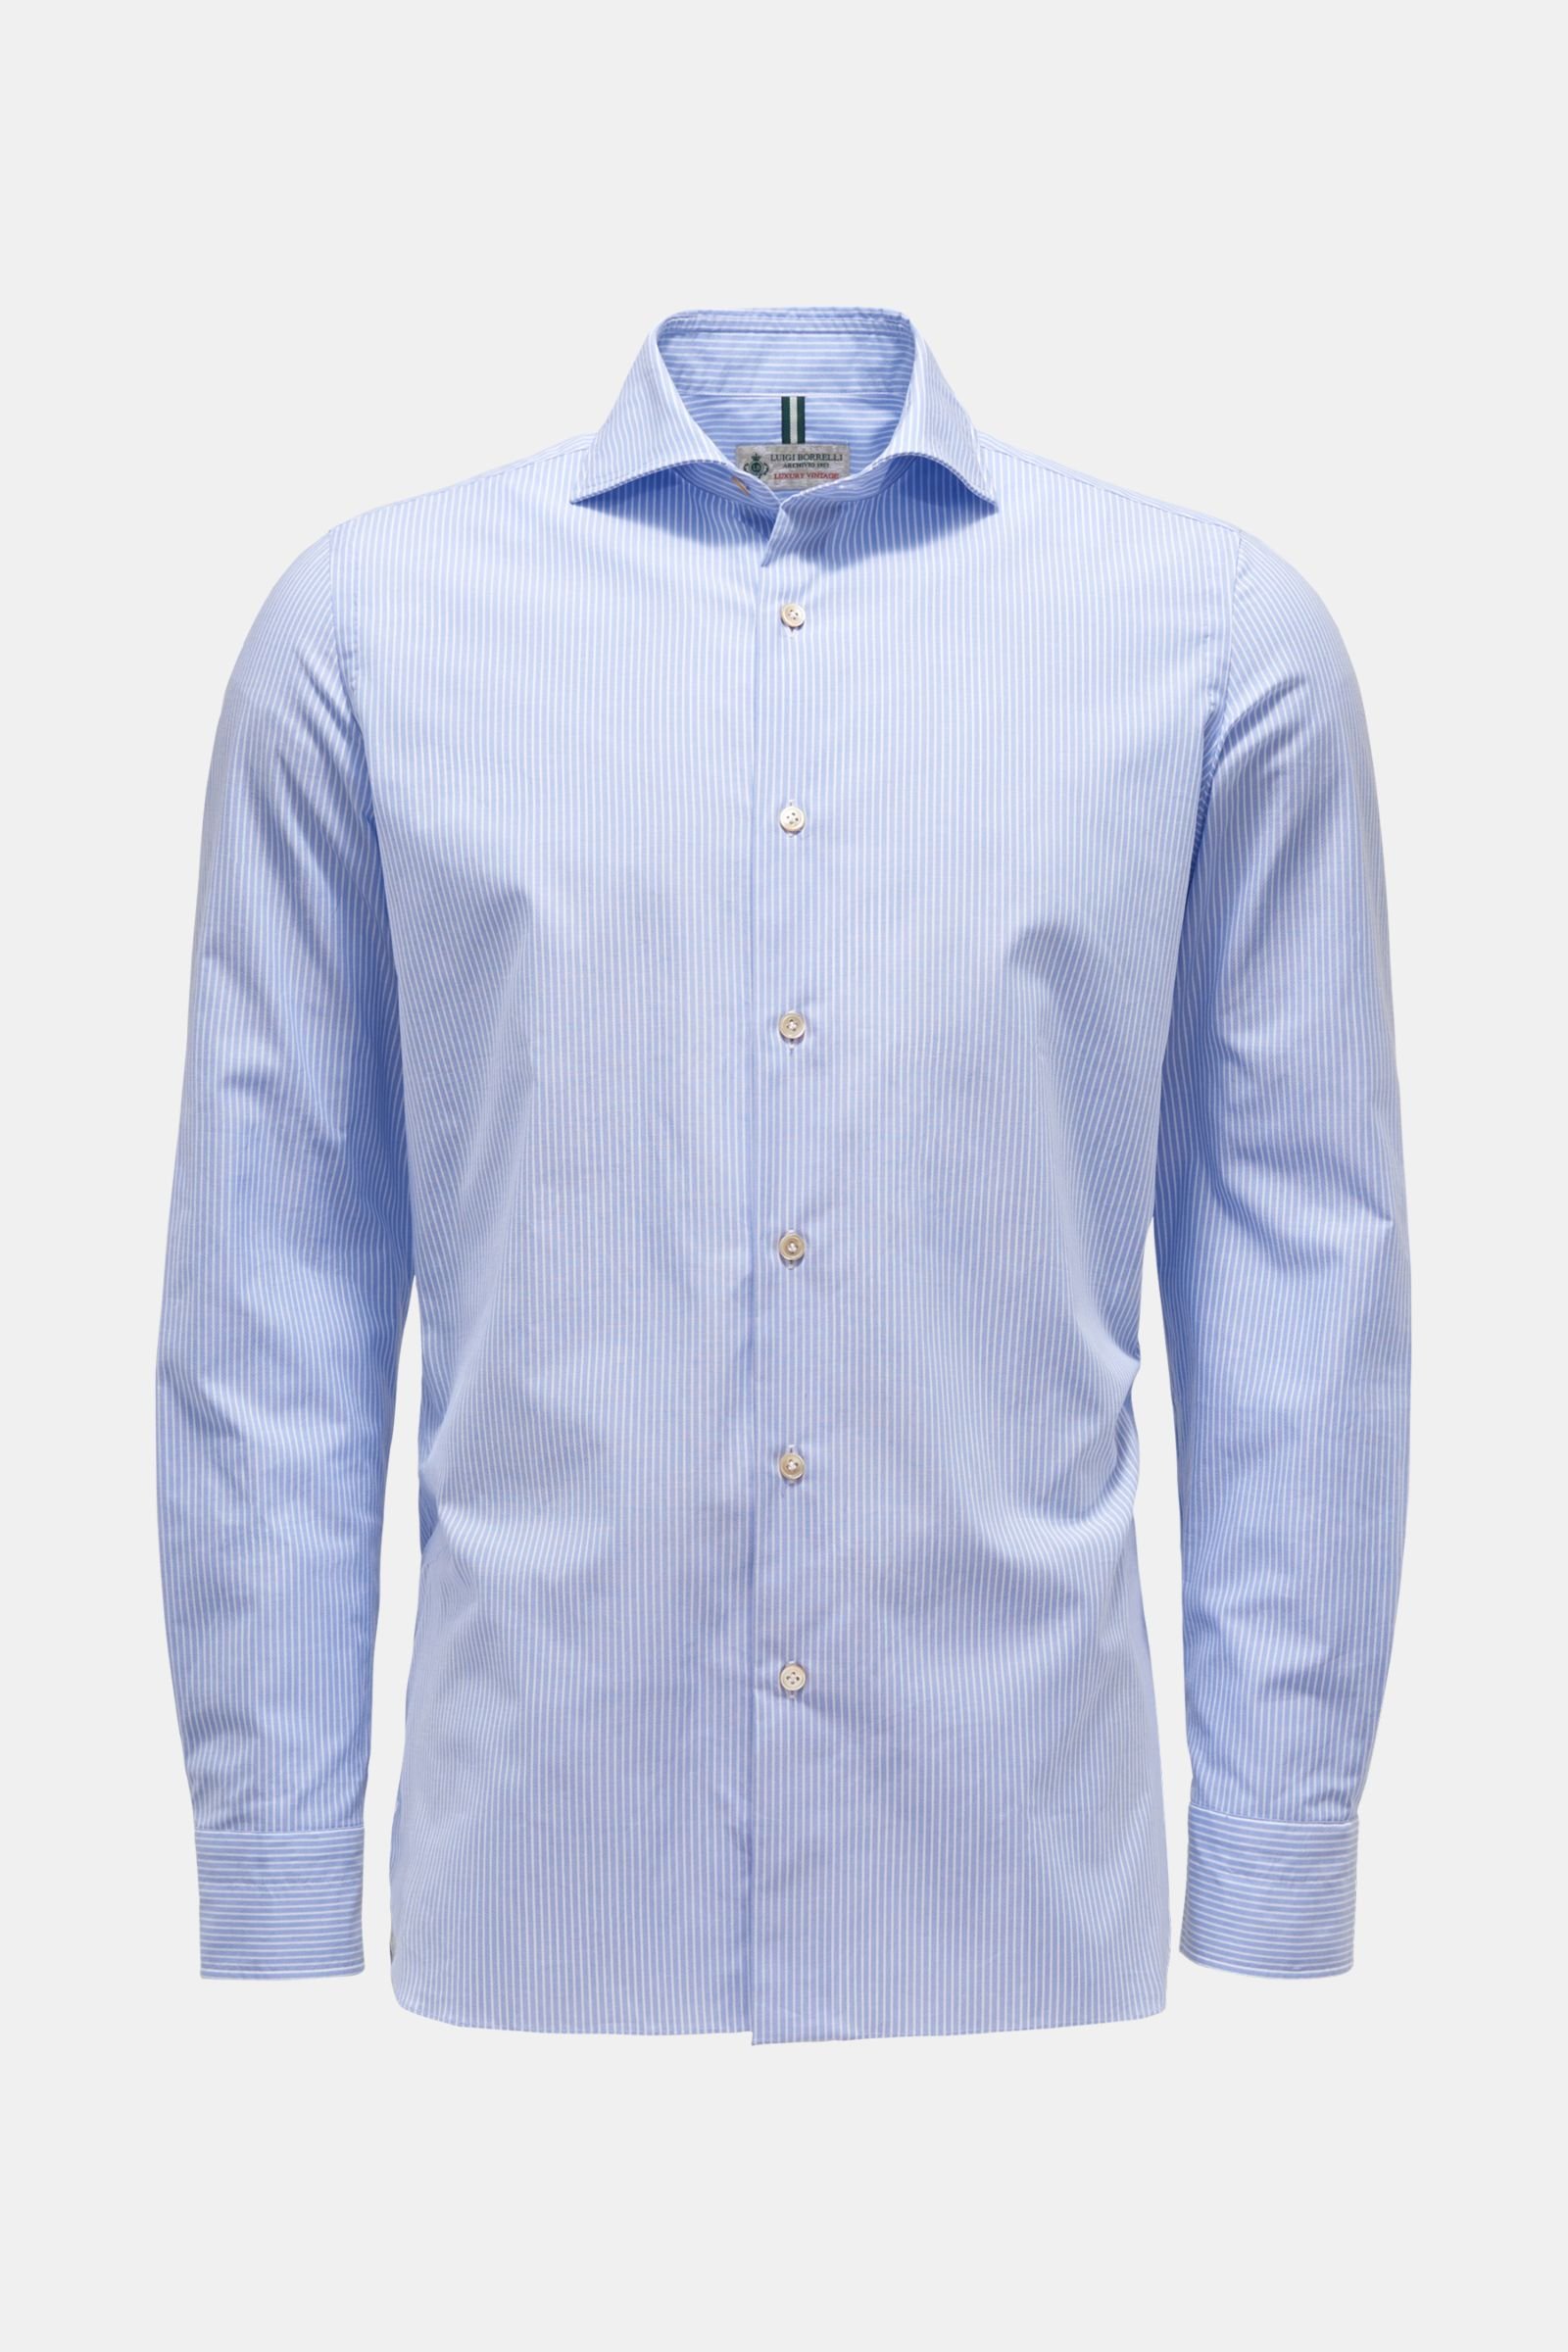 Oxford shirt 'Nando' shark collar light blue/white striped